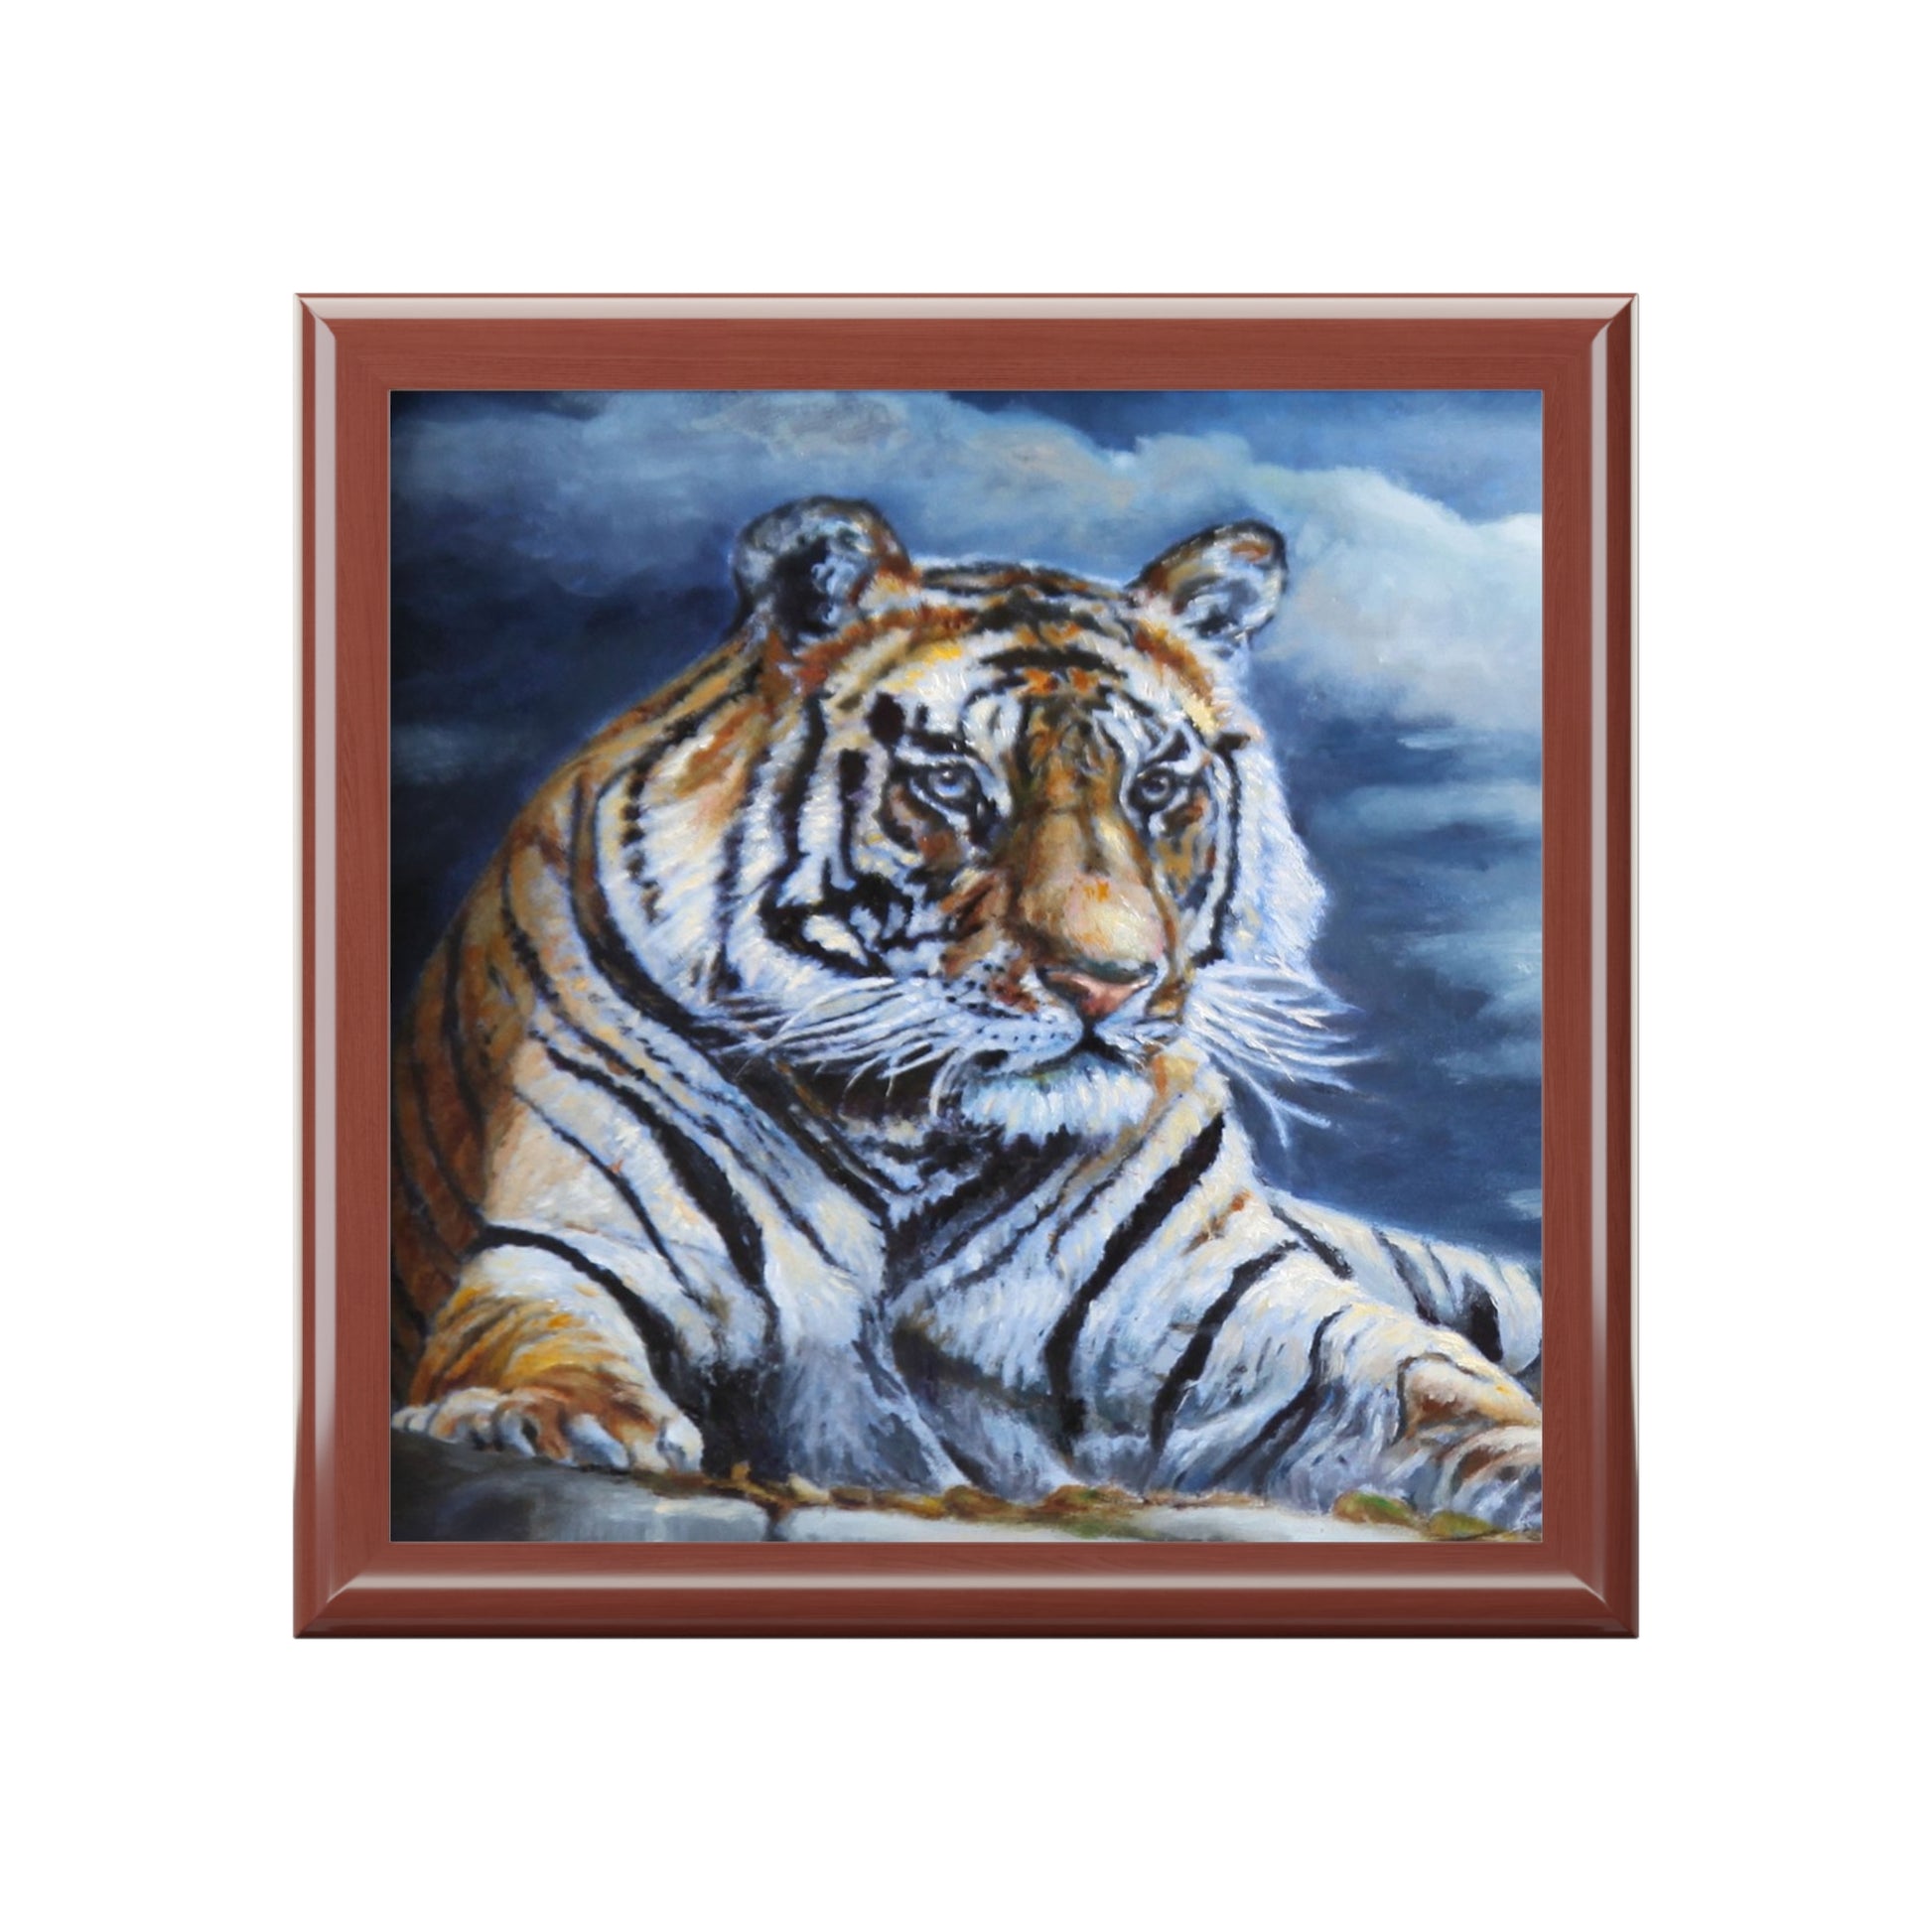 Jewelry/ Keepsake Box - Bengal Tiger Lacquer Box lid